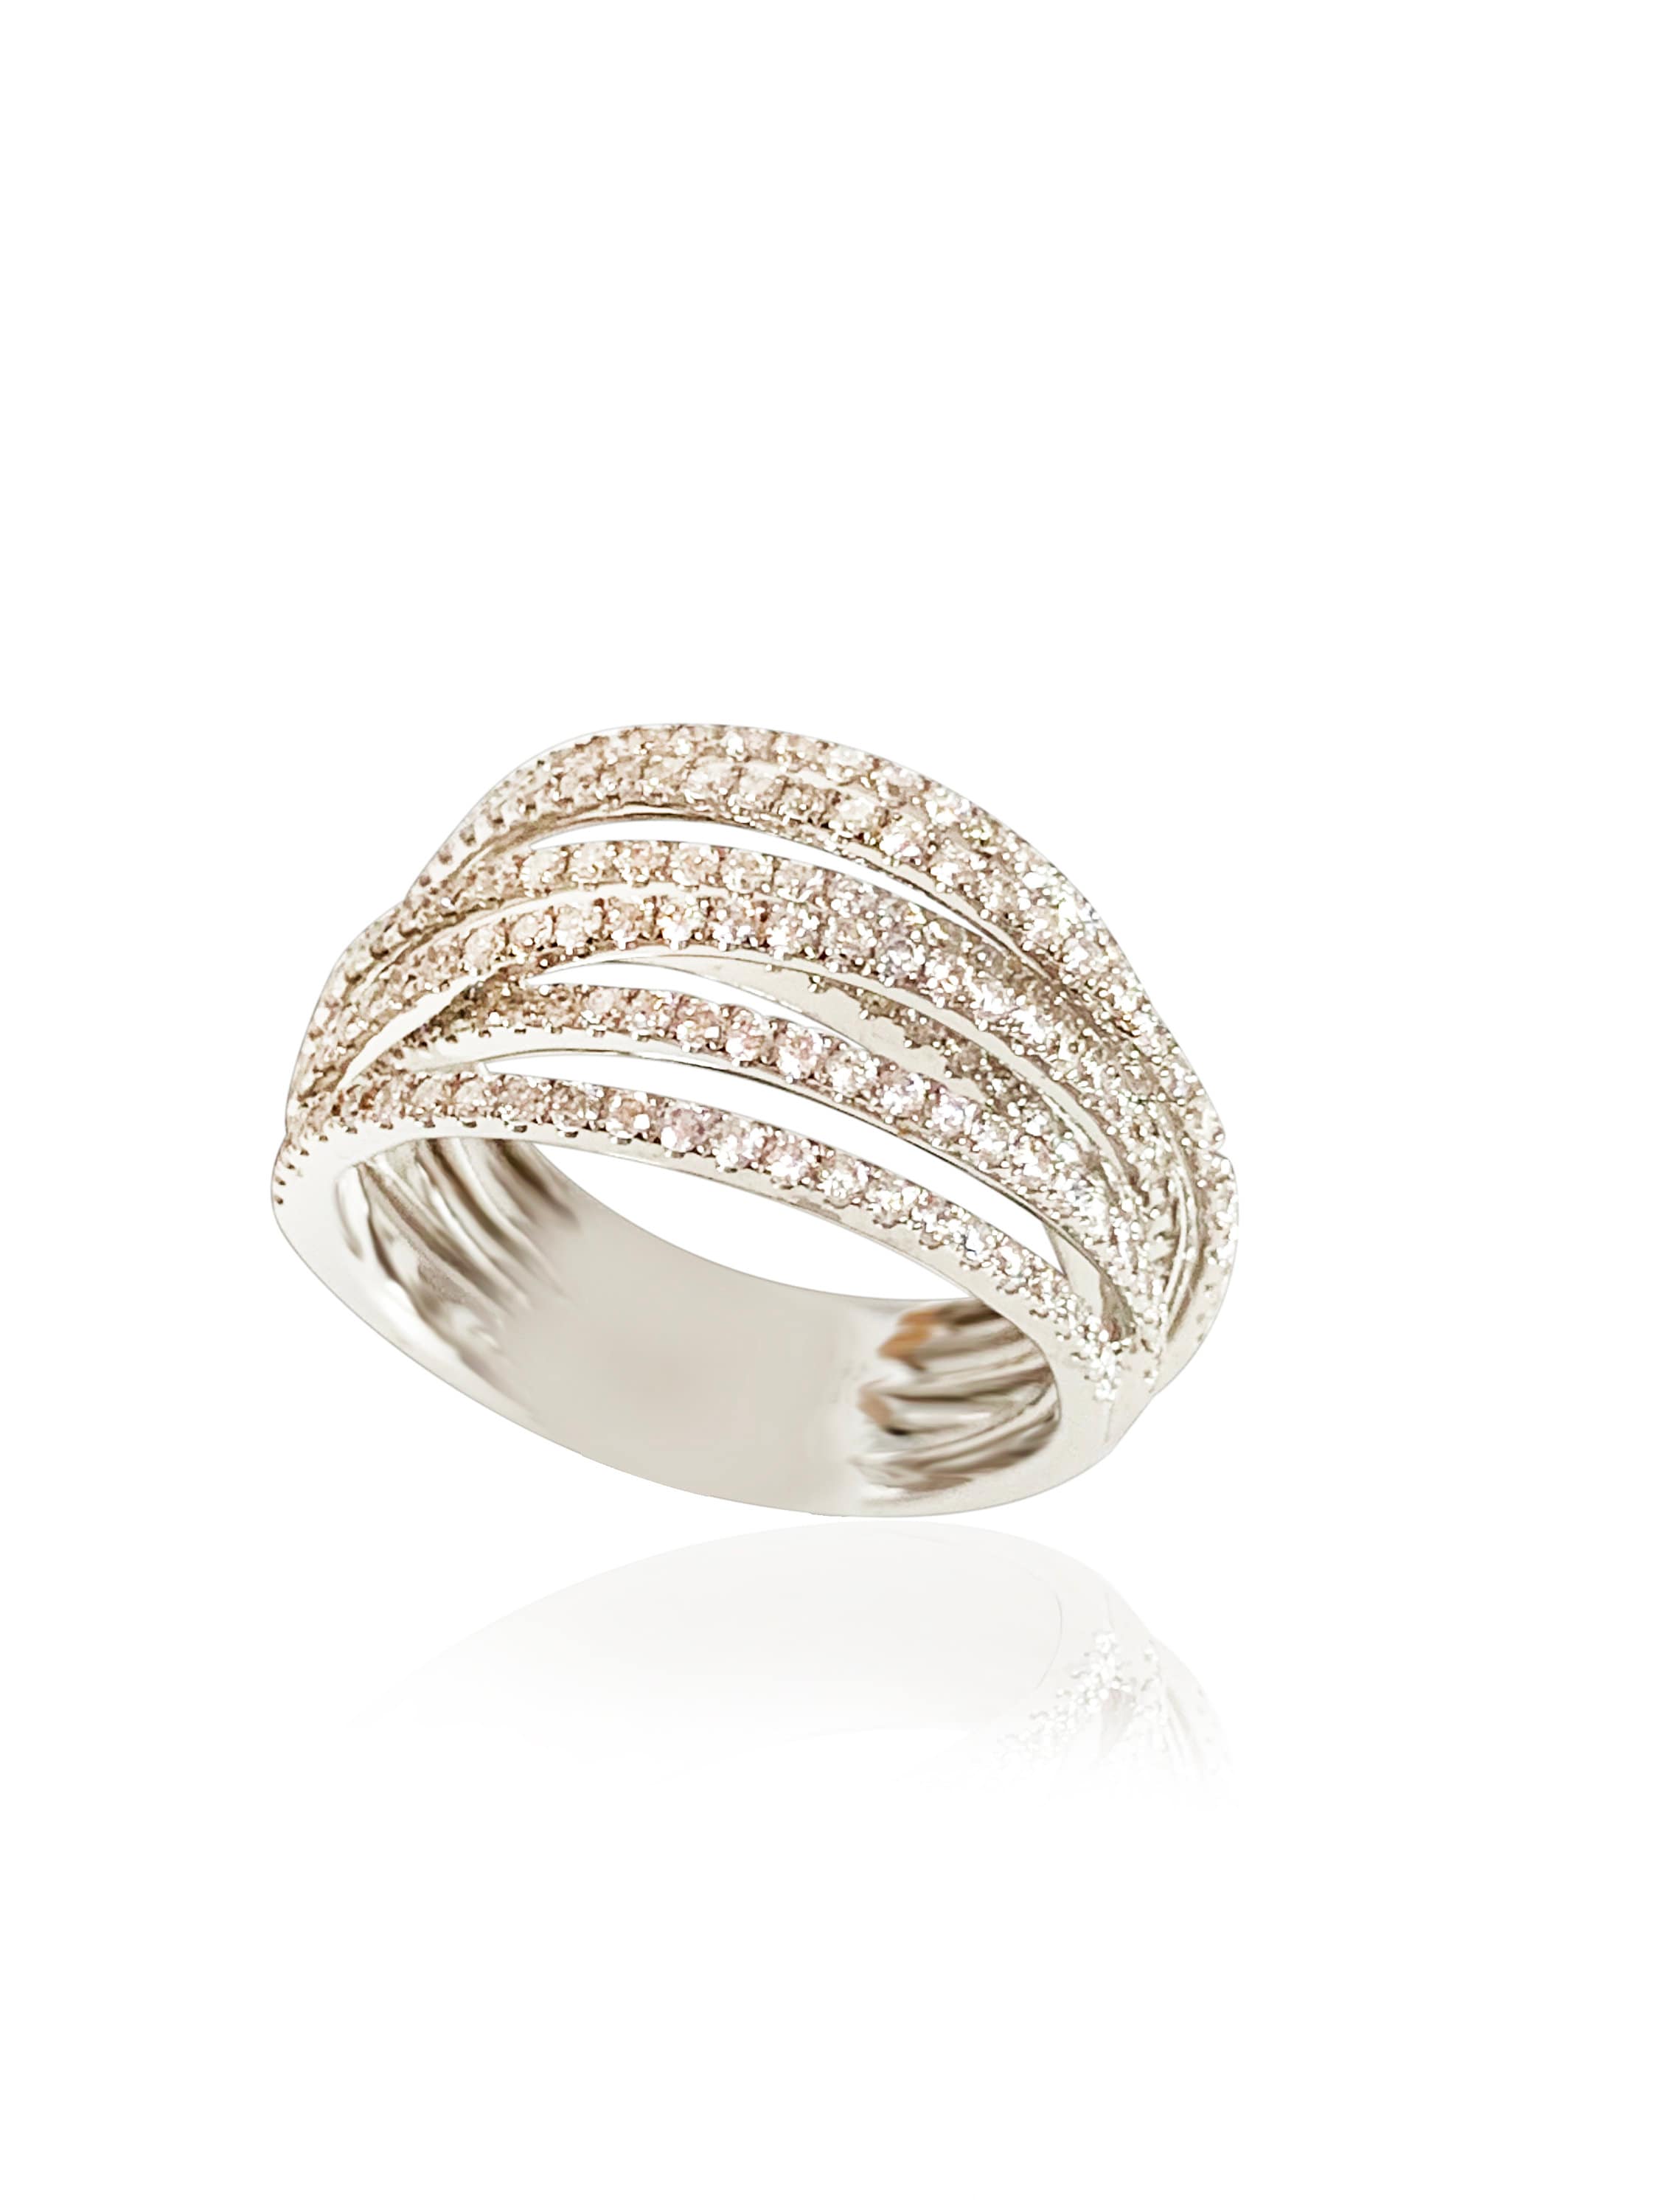 Spiral Wrap Around Women's Diamond Ring in 18 K White - Etsy